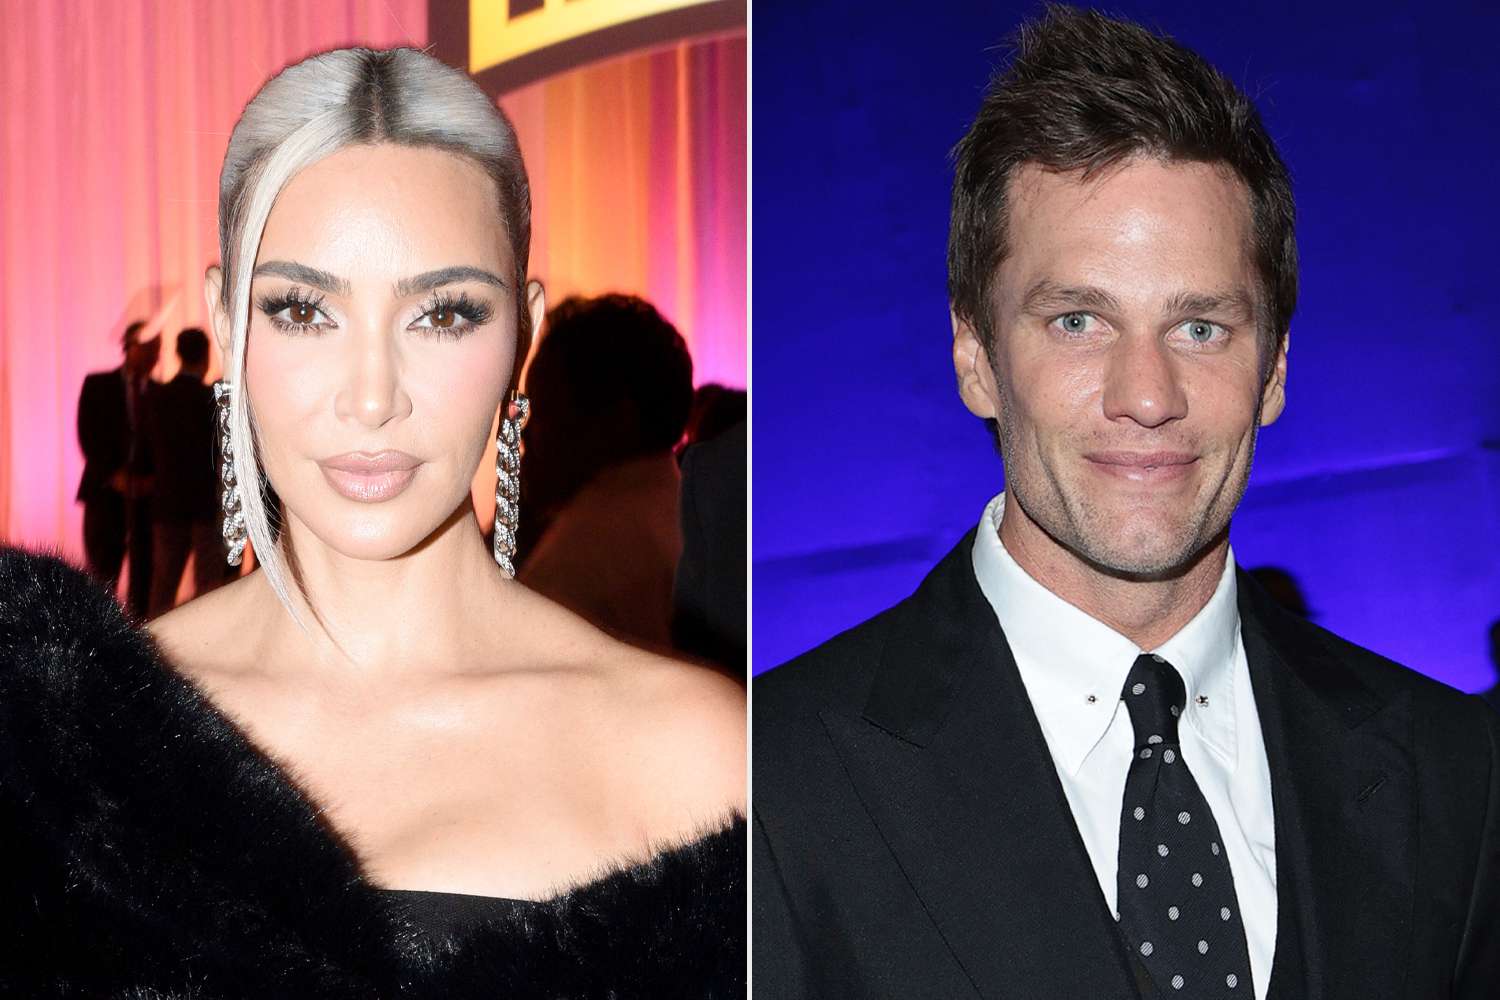 Kim Kardashian Addresses Tom Brady Dating 'Rumors' During Netflix Comedy Roast: 'I'd Never Say'